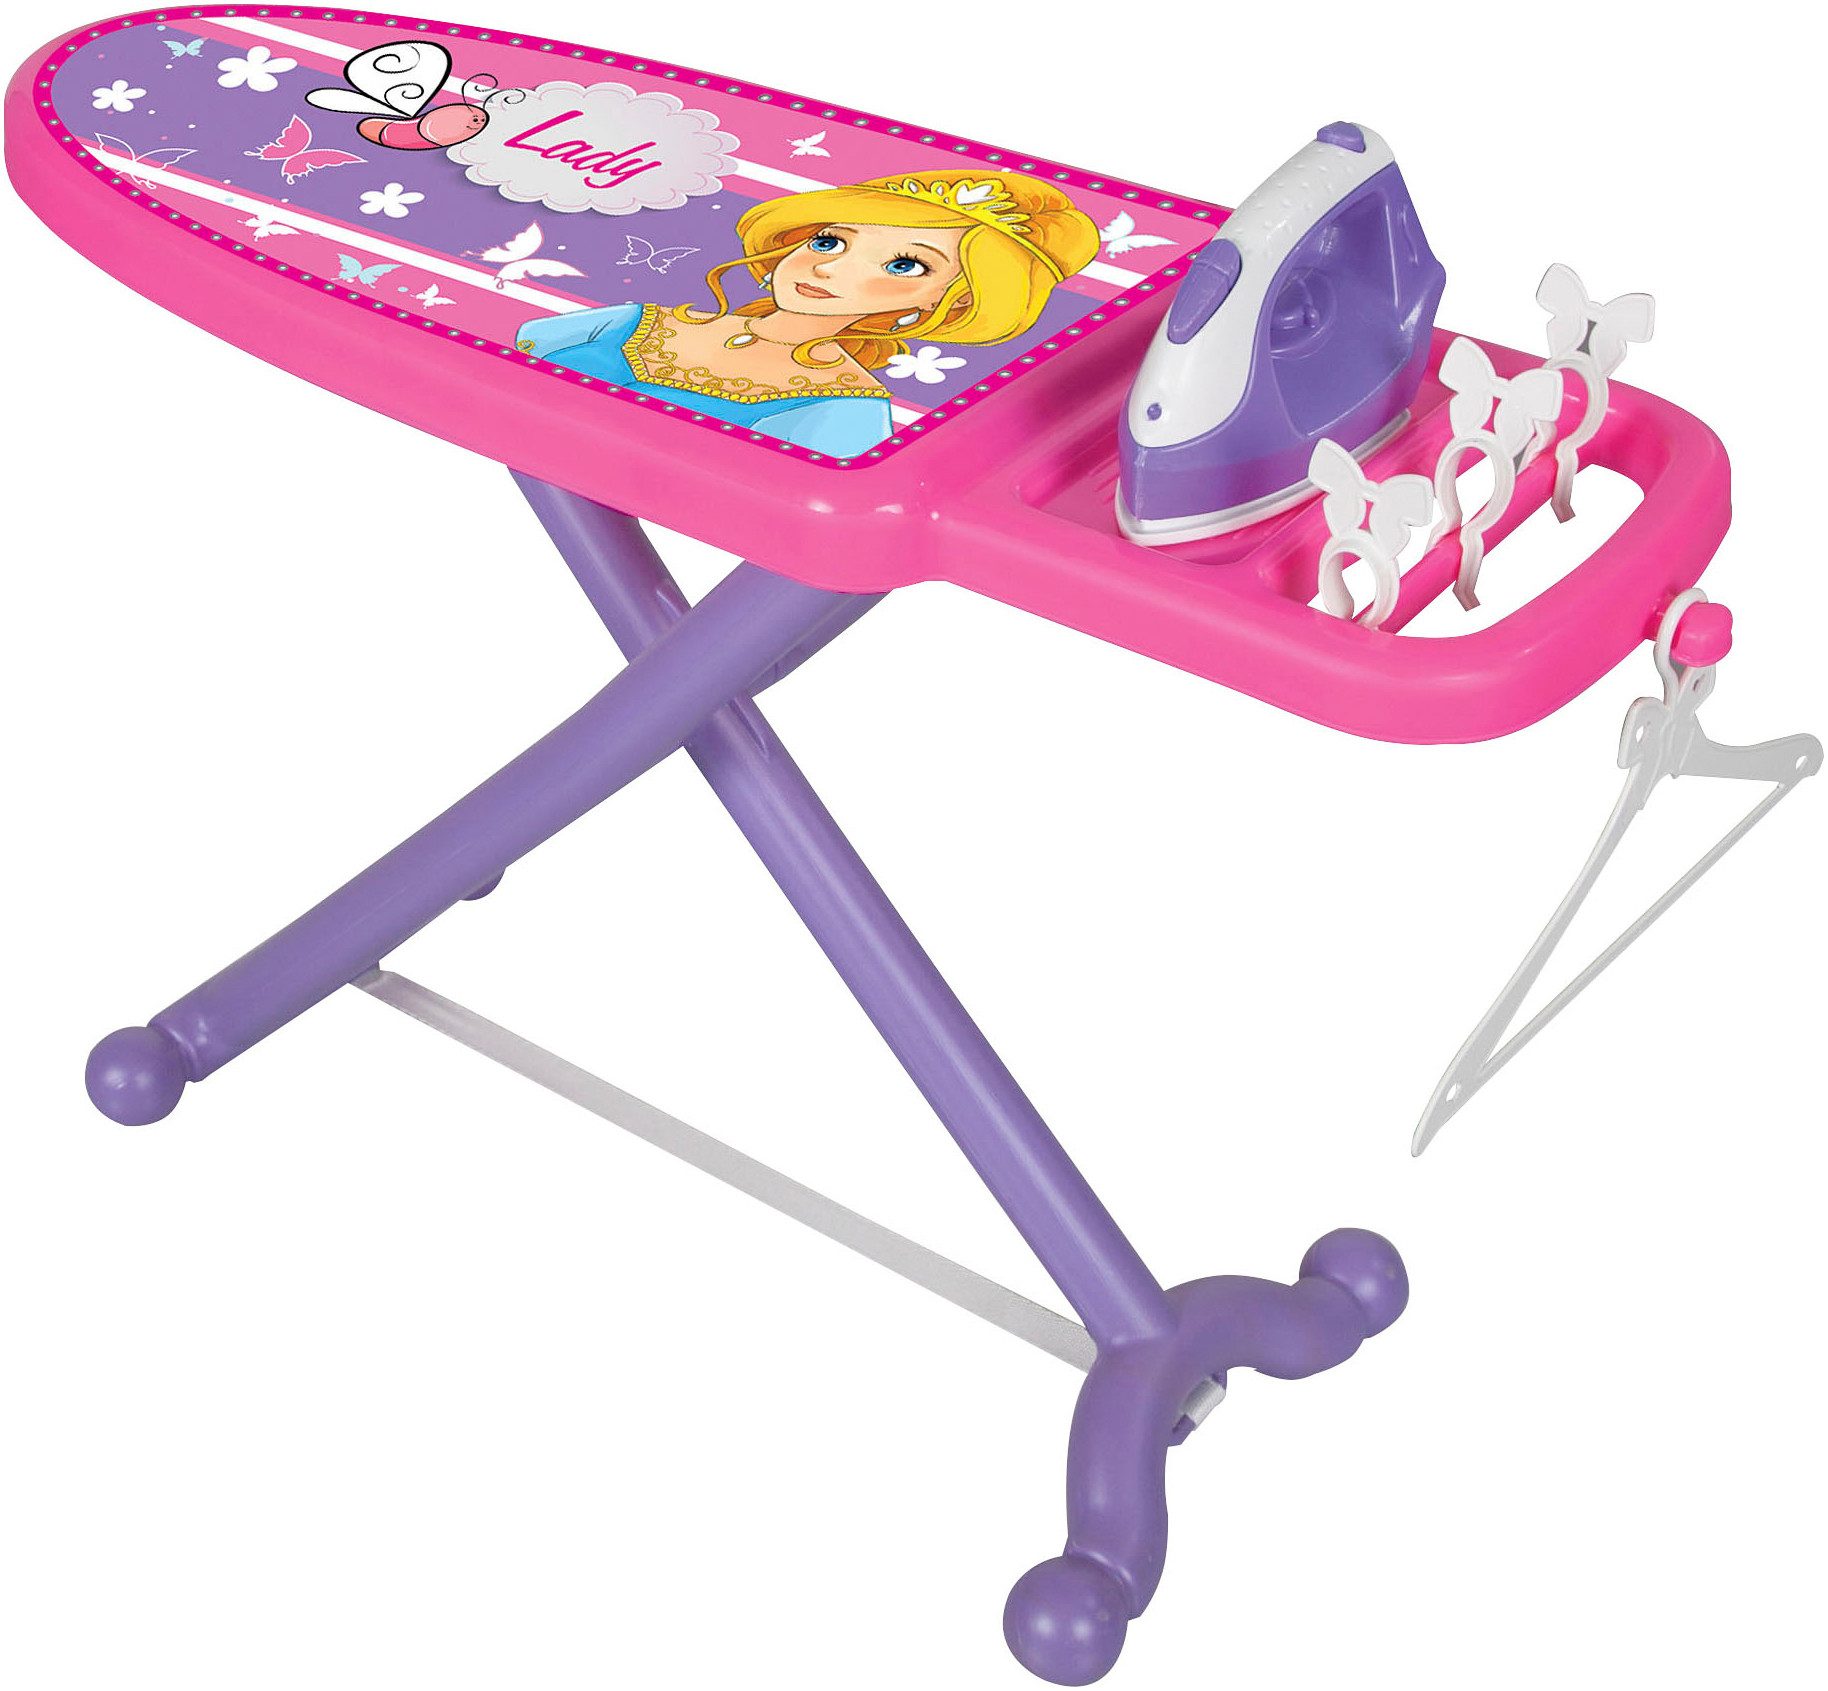 Jamara Kinder-Bügelbrett Bügelset Little Laundry Princess, pink, (6-tlg)